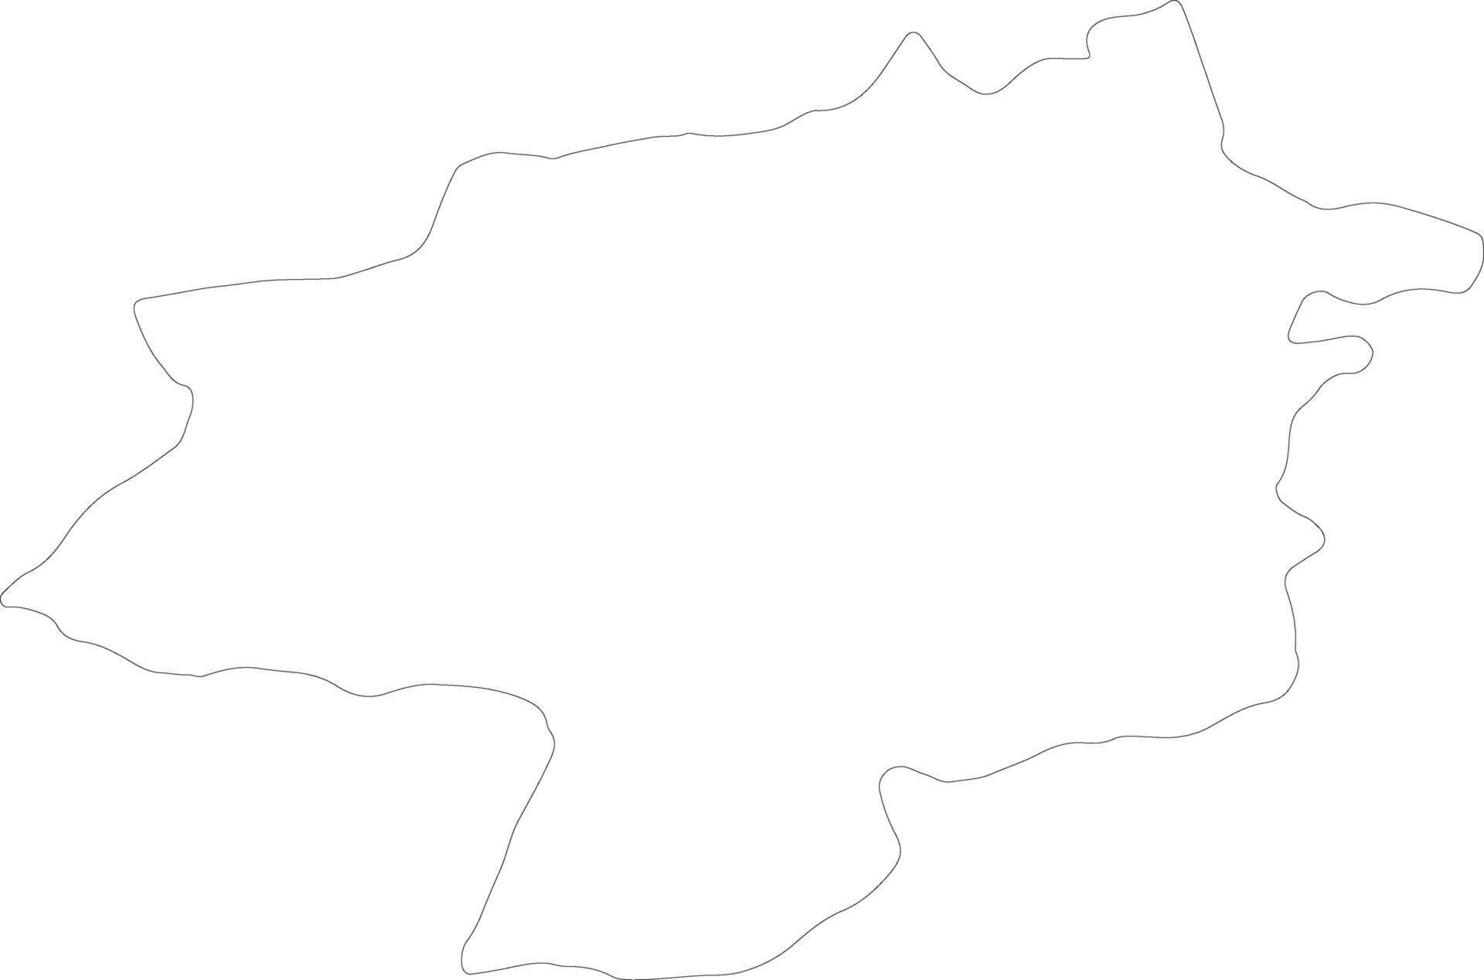 Sivas Turkey outline map vector